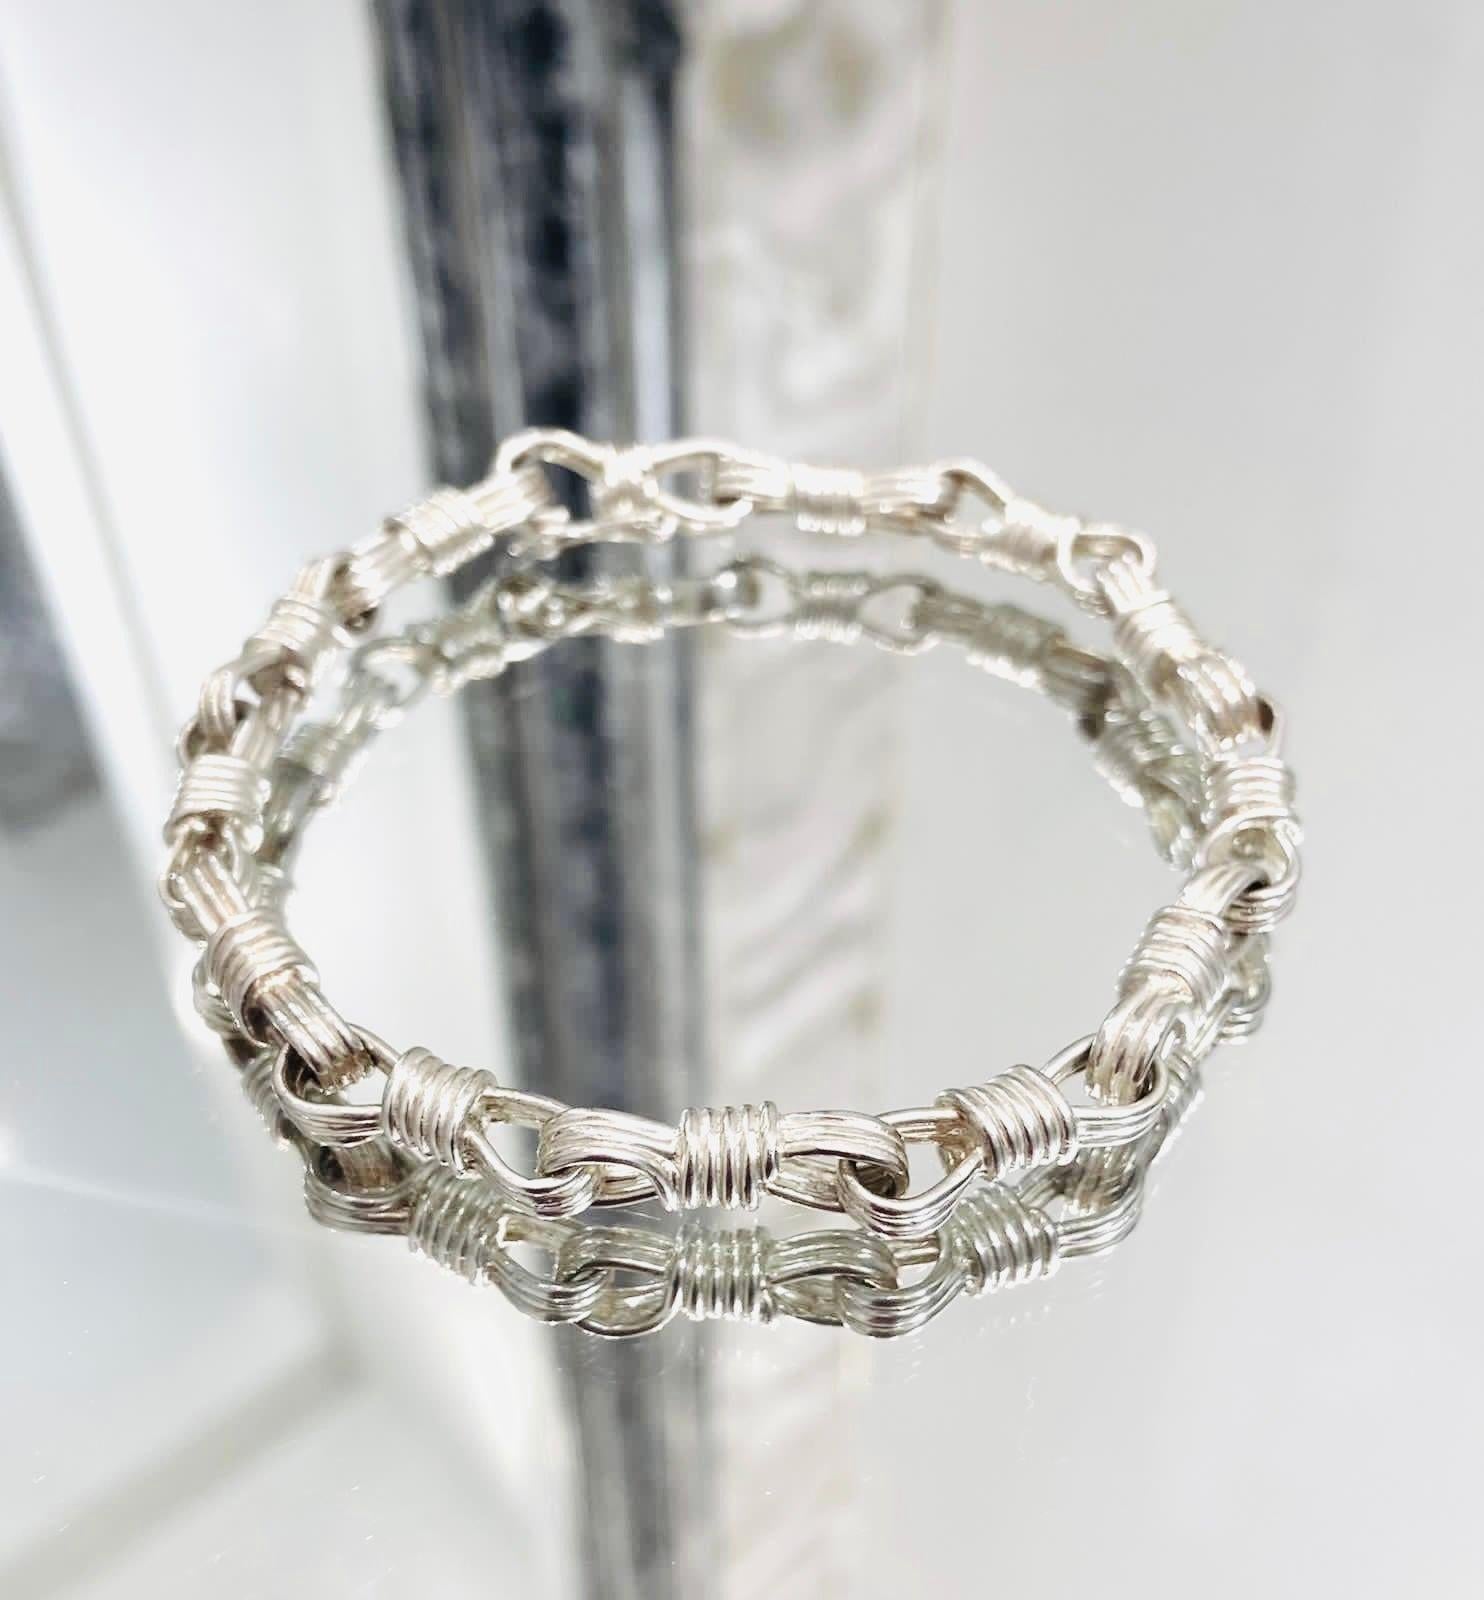 Jean Paul Gaultier Sterling Silver Bracelet

Heavy chain link bracelet.

Additional information:
Size – One Size
Composition – 925 Sterling Silver 
Condition –  Vintage - Very Good
Comes With - Bracelet Only 